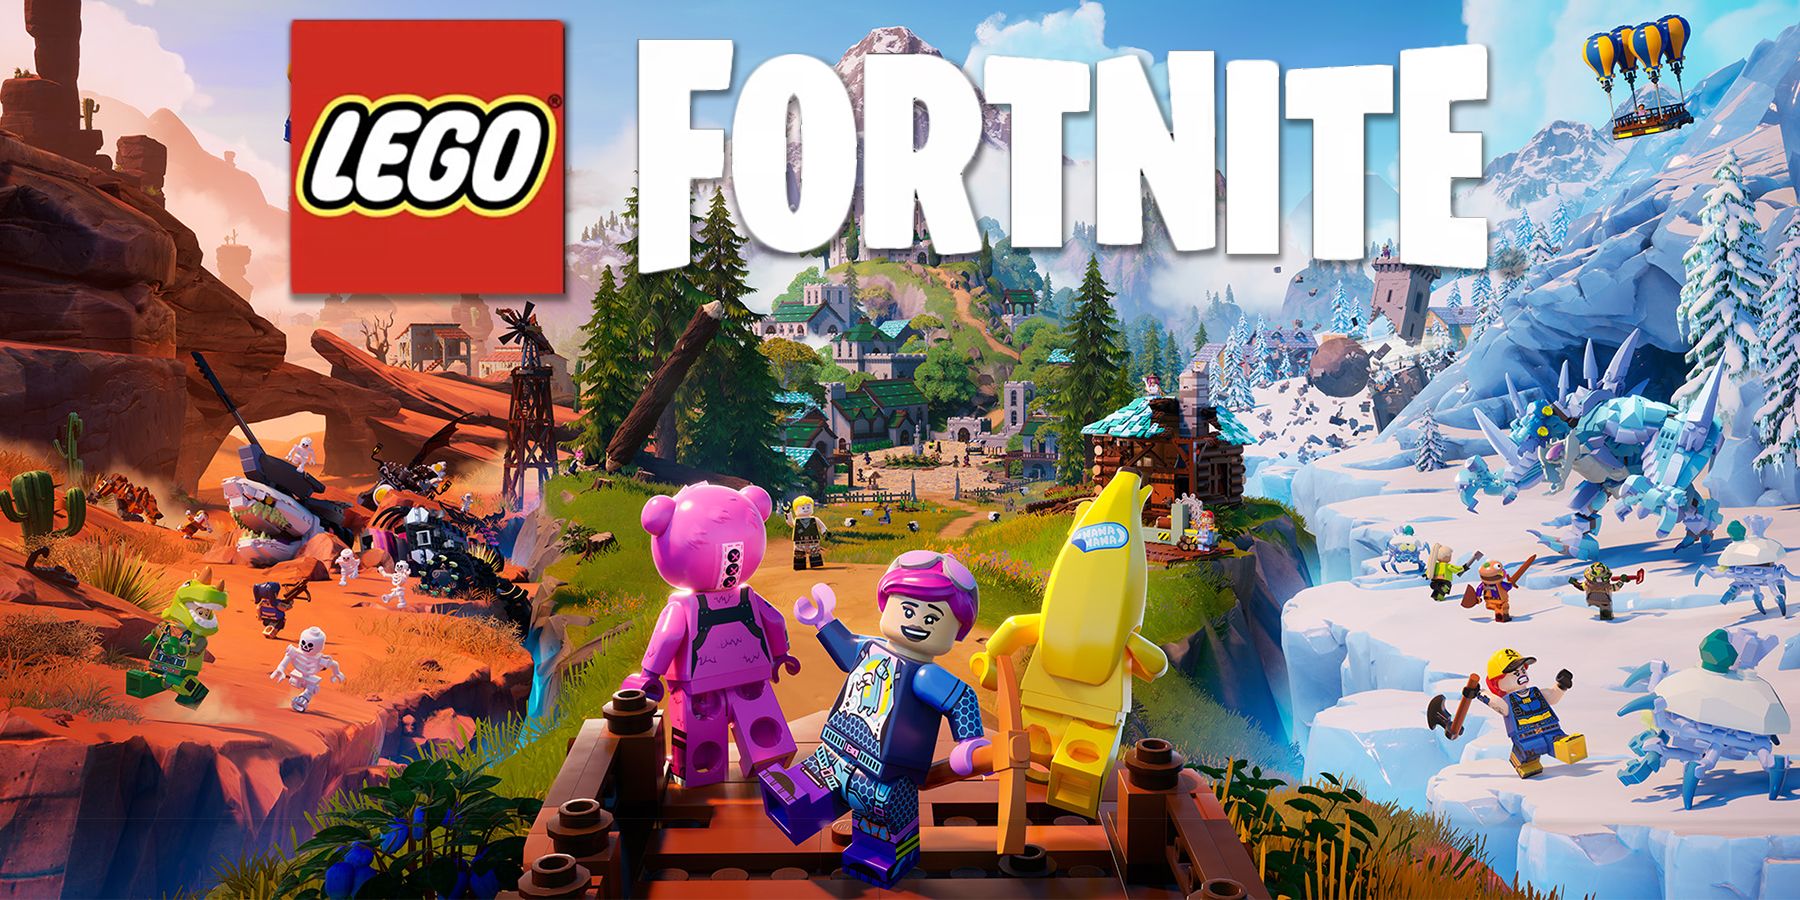 LEGO Fortnite promo graphic with logo